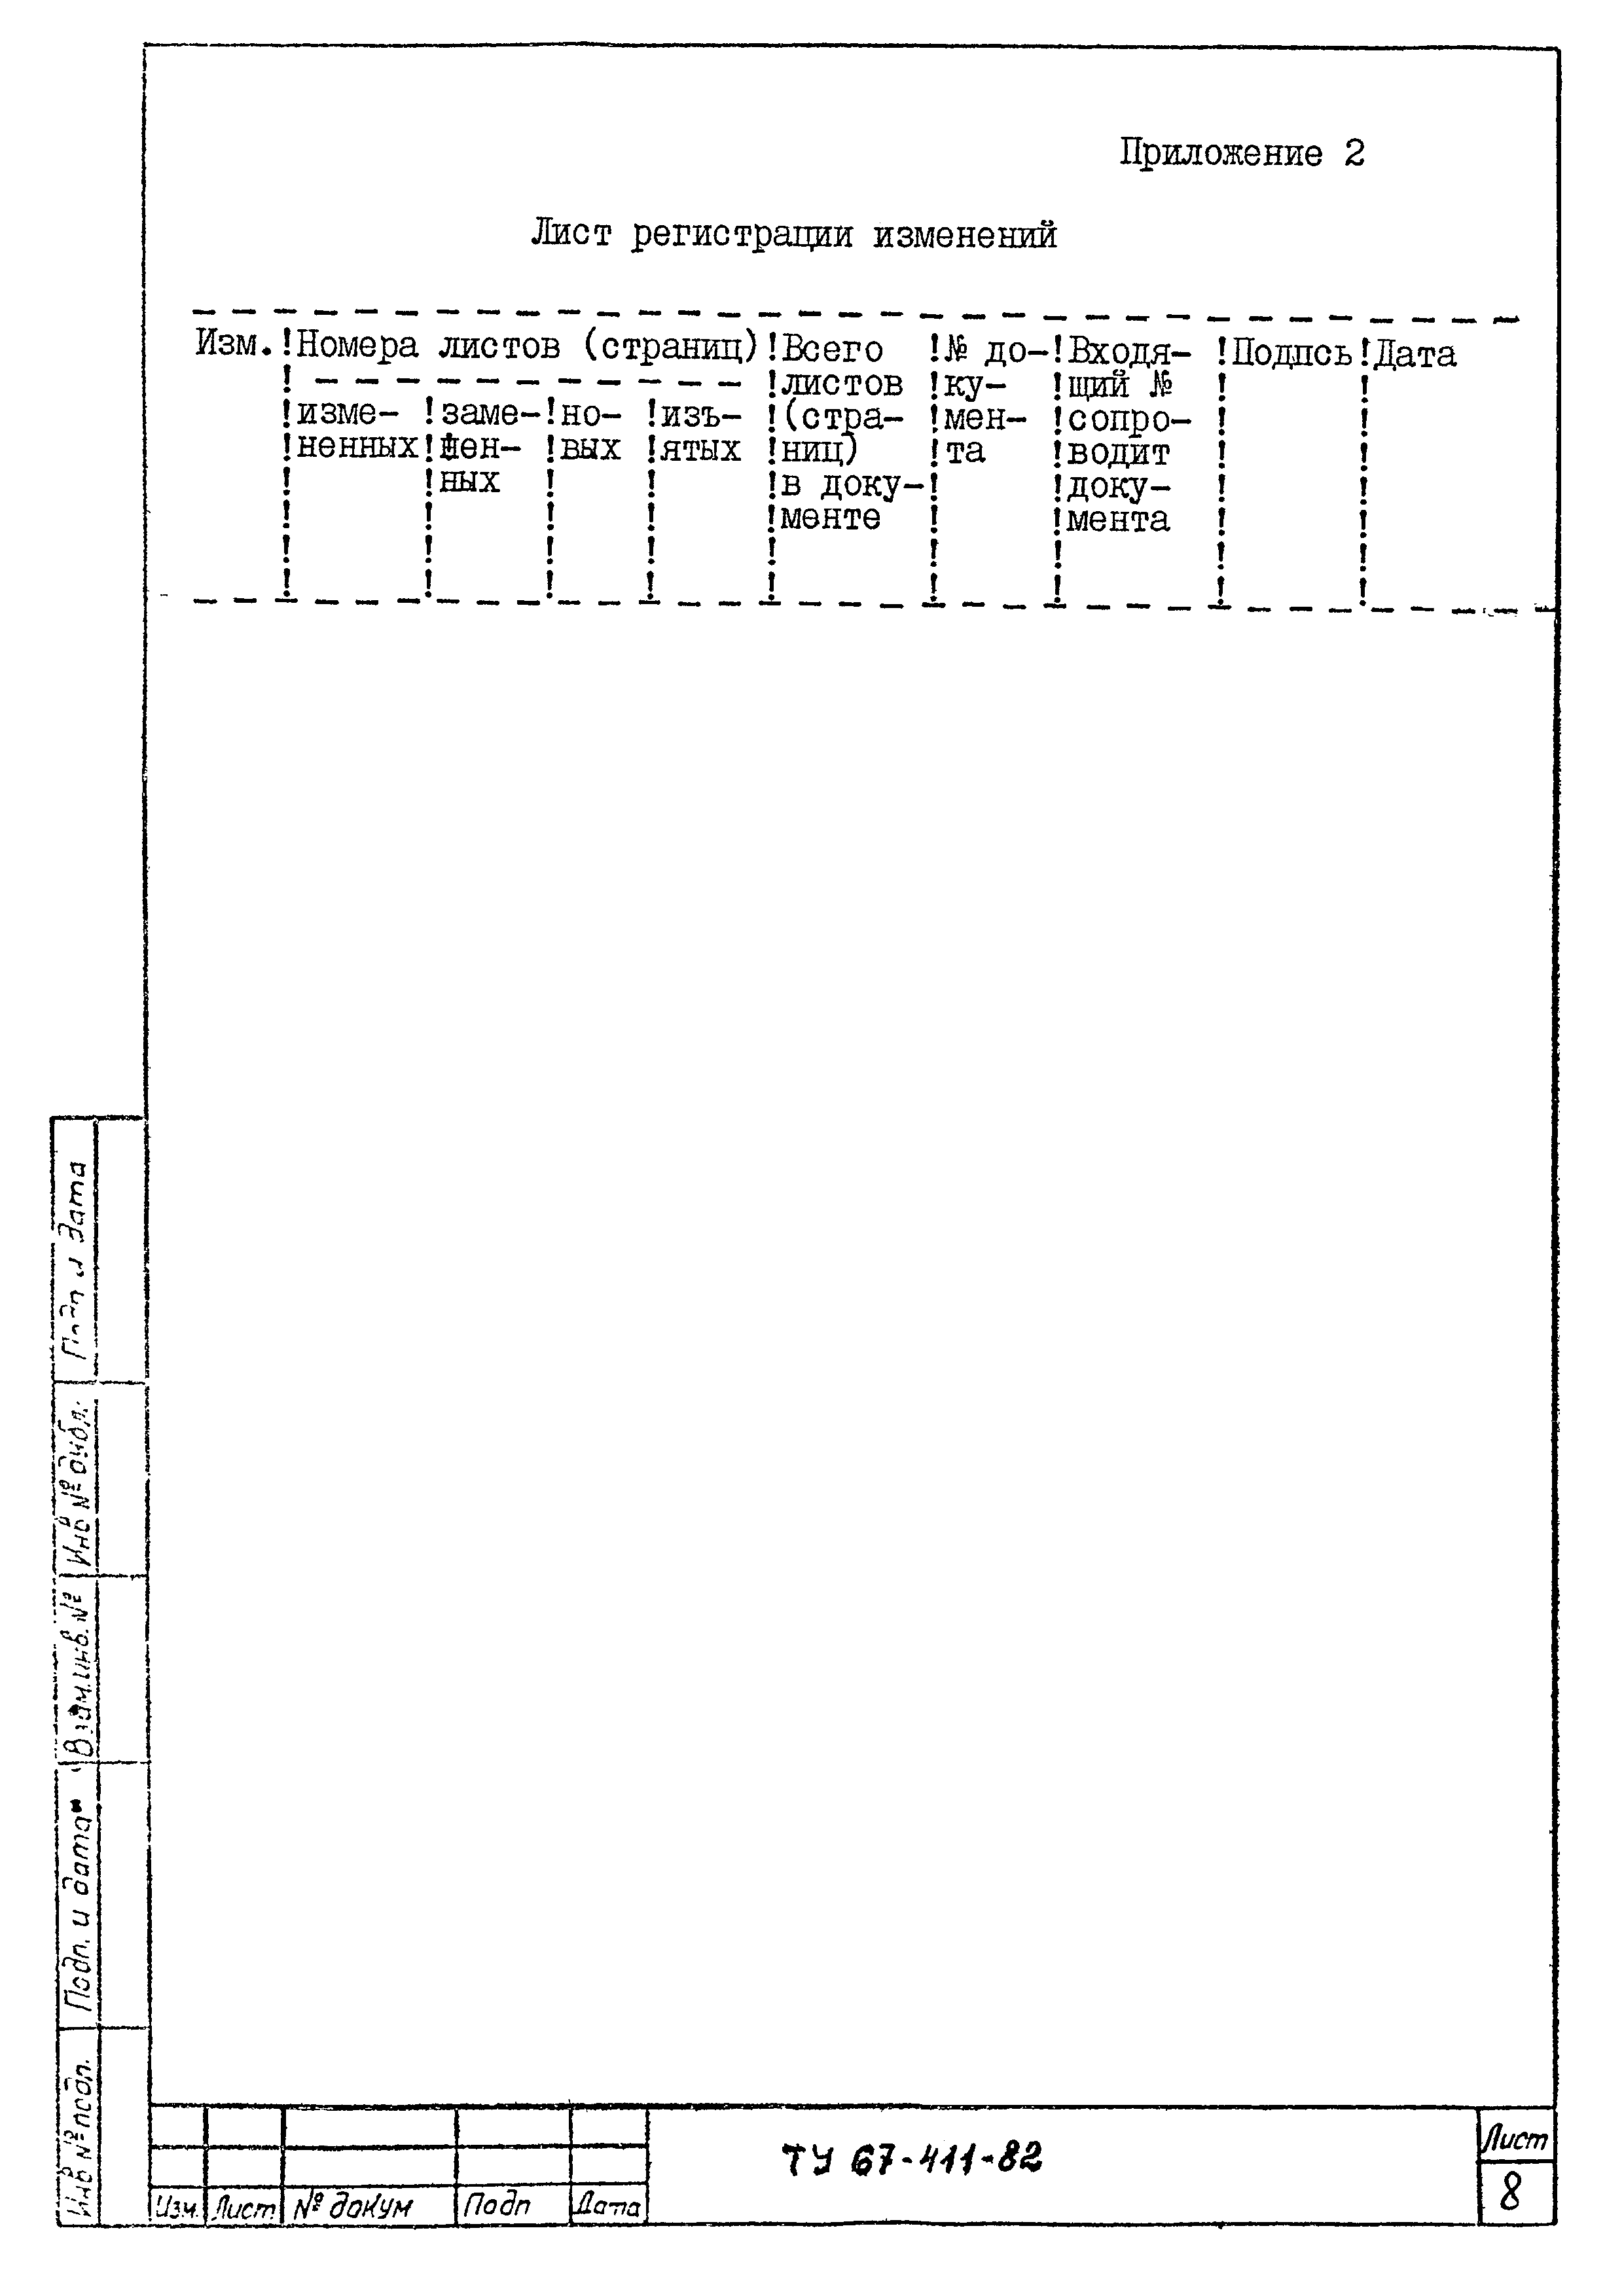 ТУ 67-411-82